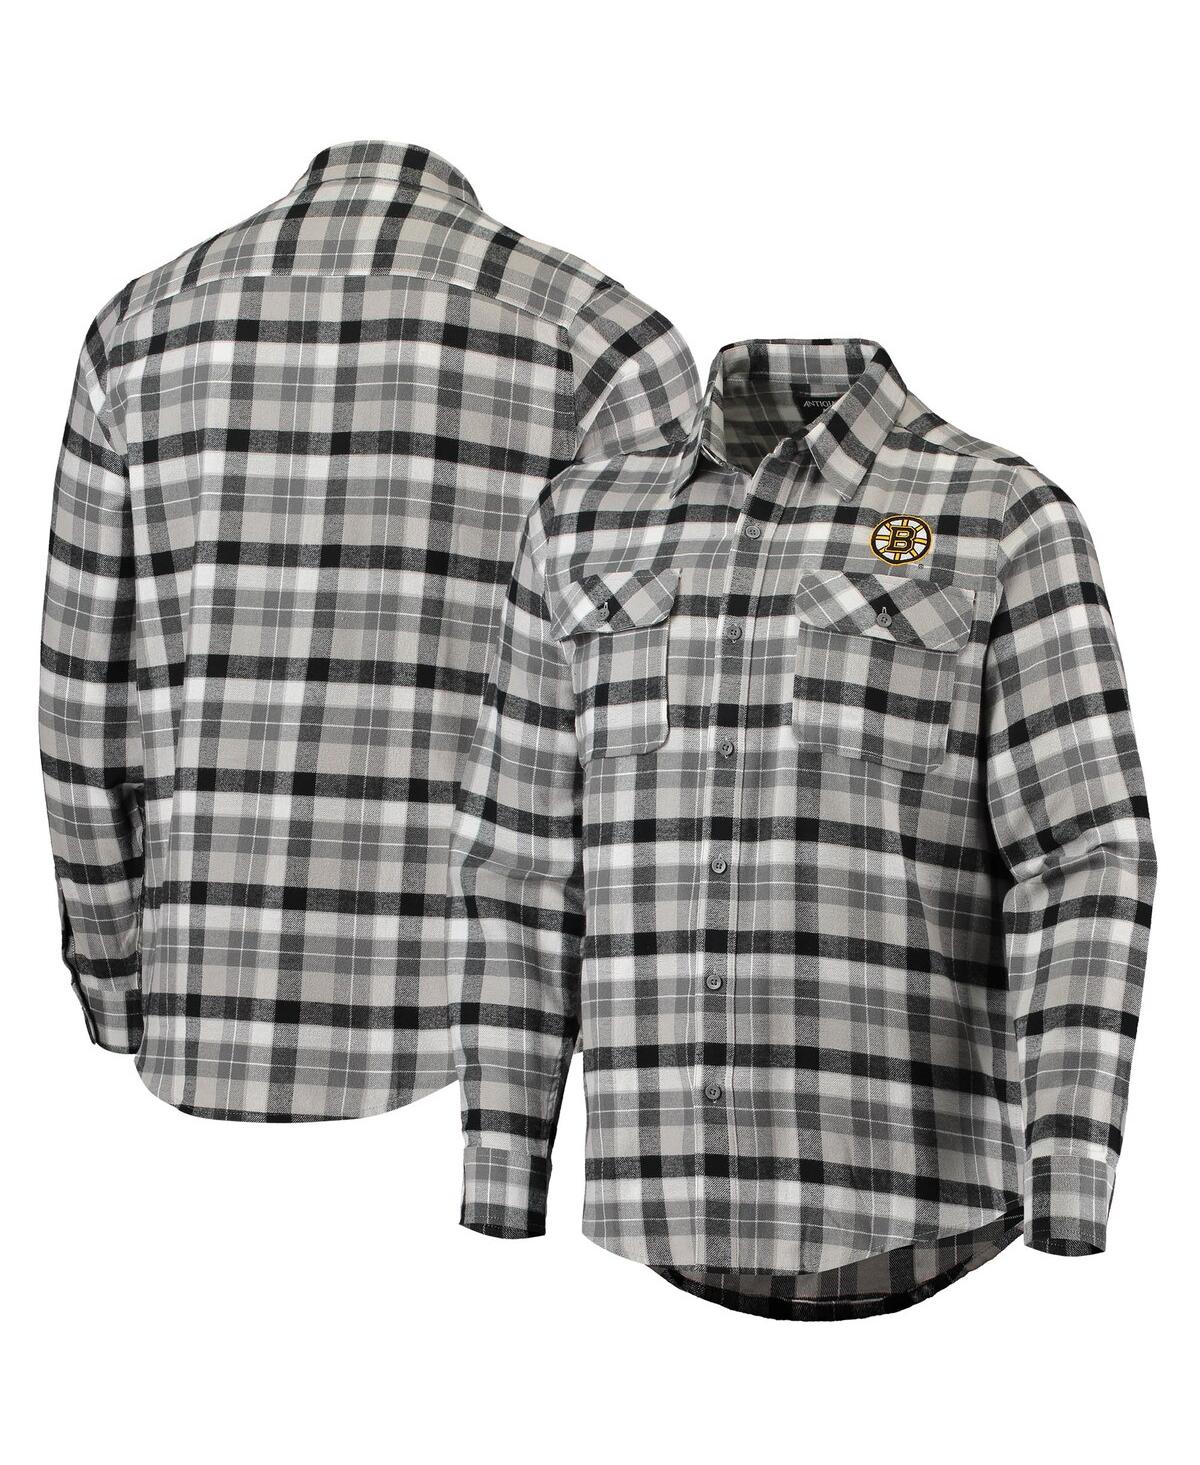 Men's Antigua Black and Gray Boston Bruins Ease Plaid Button-Up Long Sleeve Shirt - Black, Gray